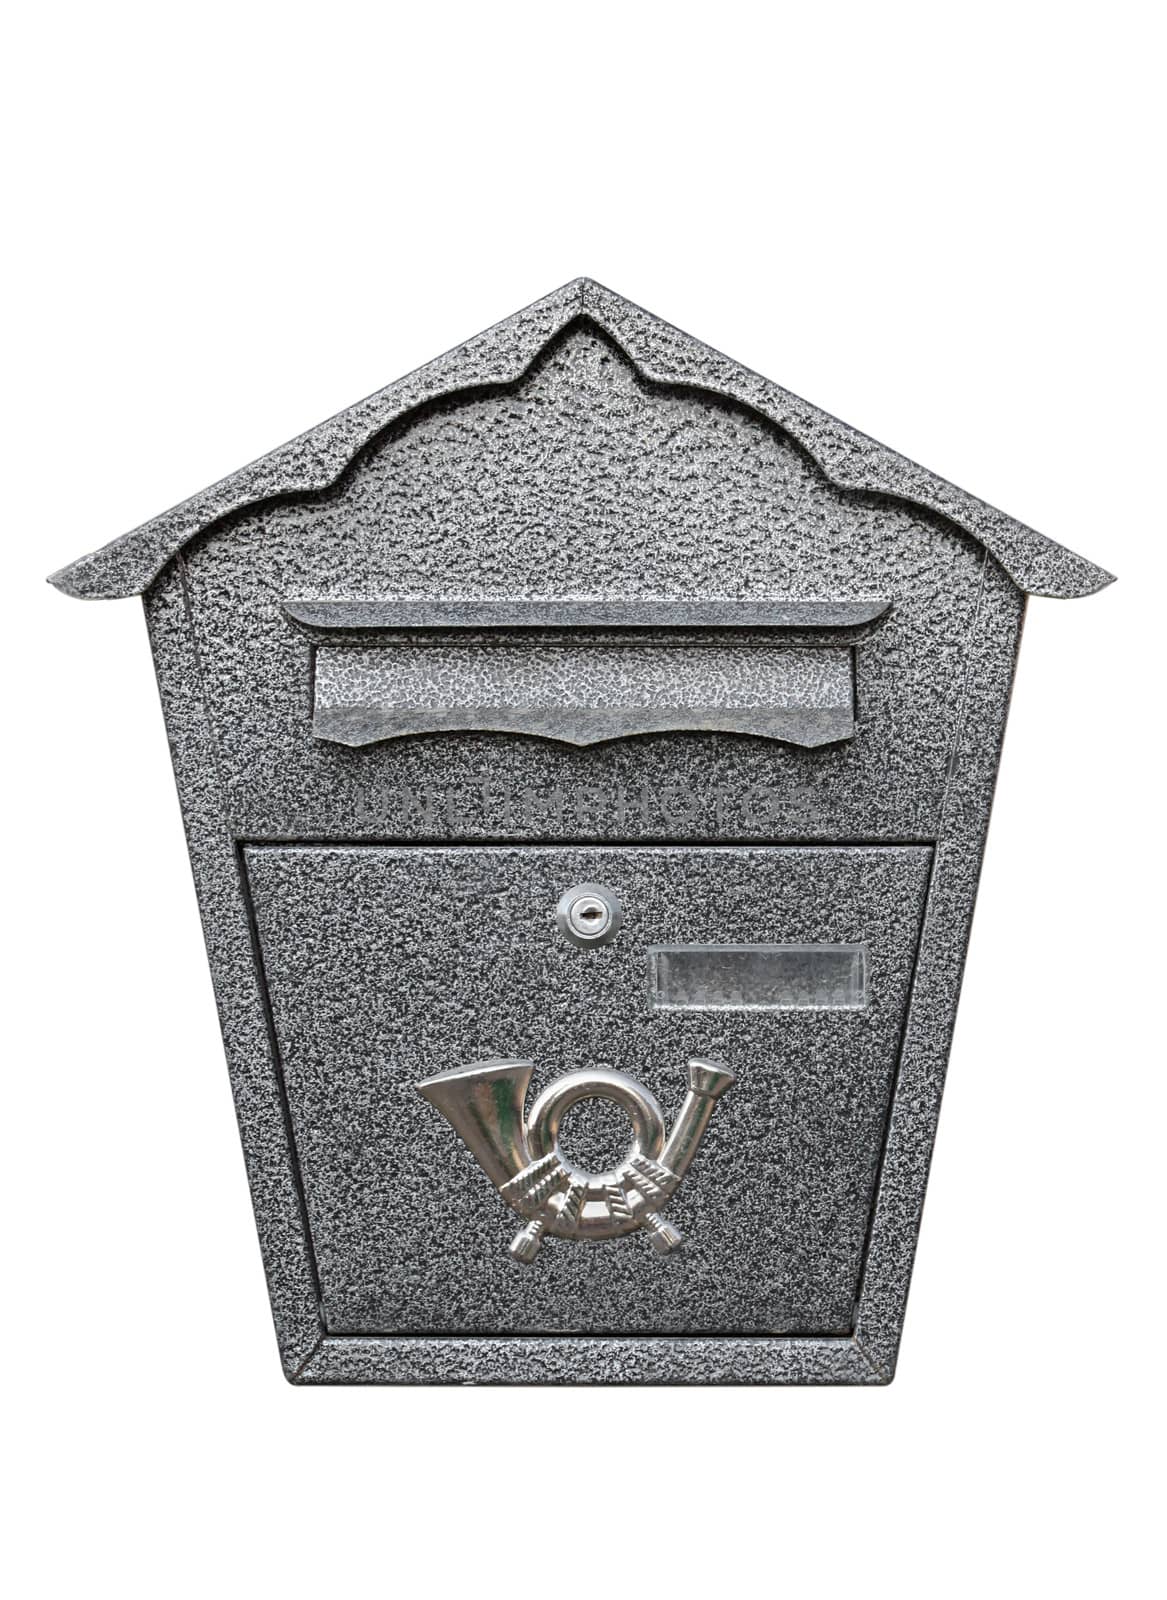 metallic mailbox by romantiche